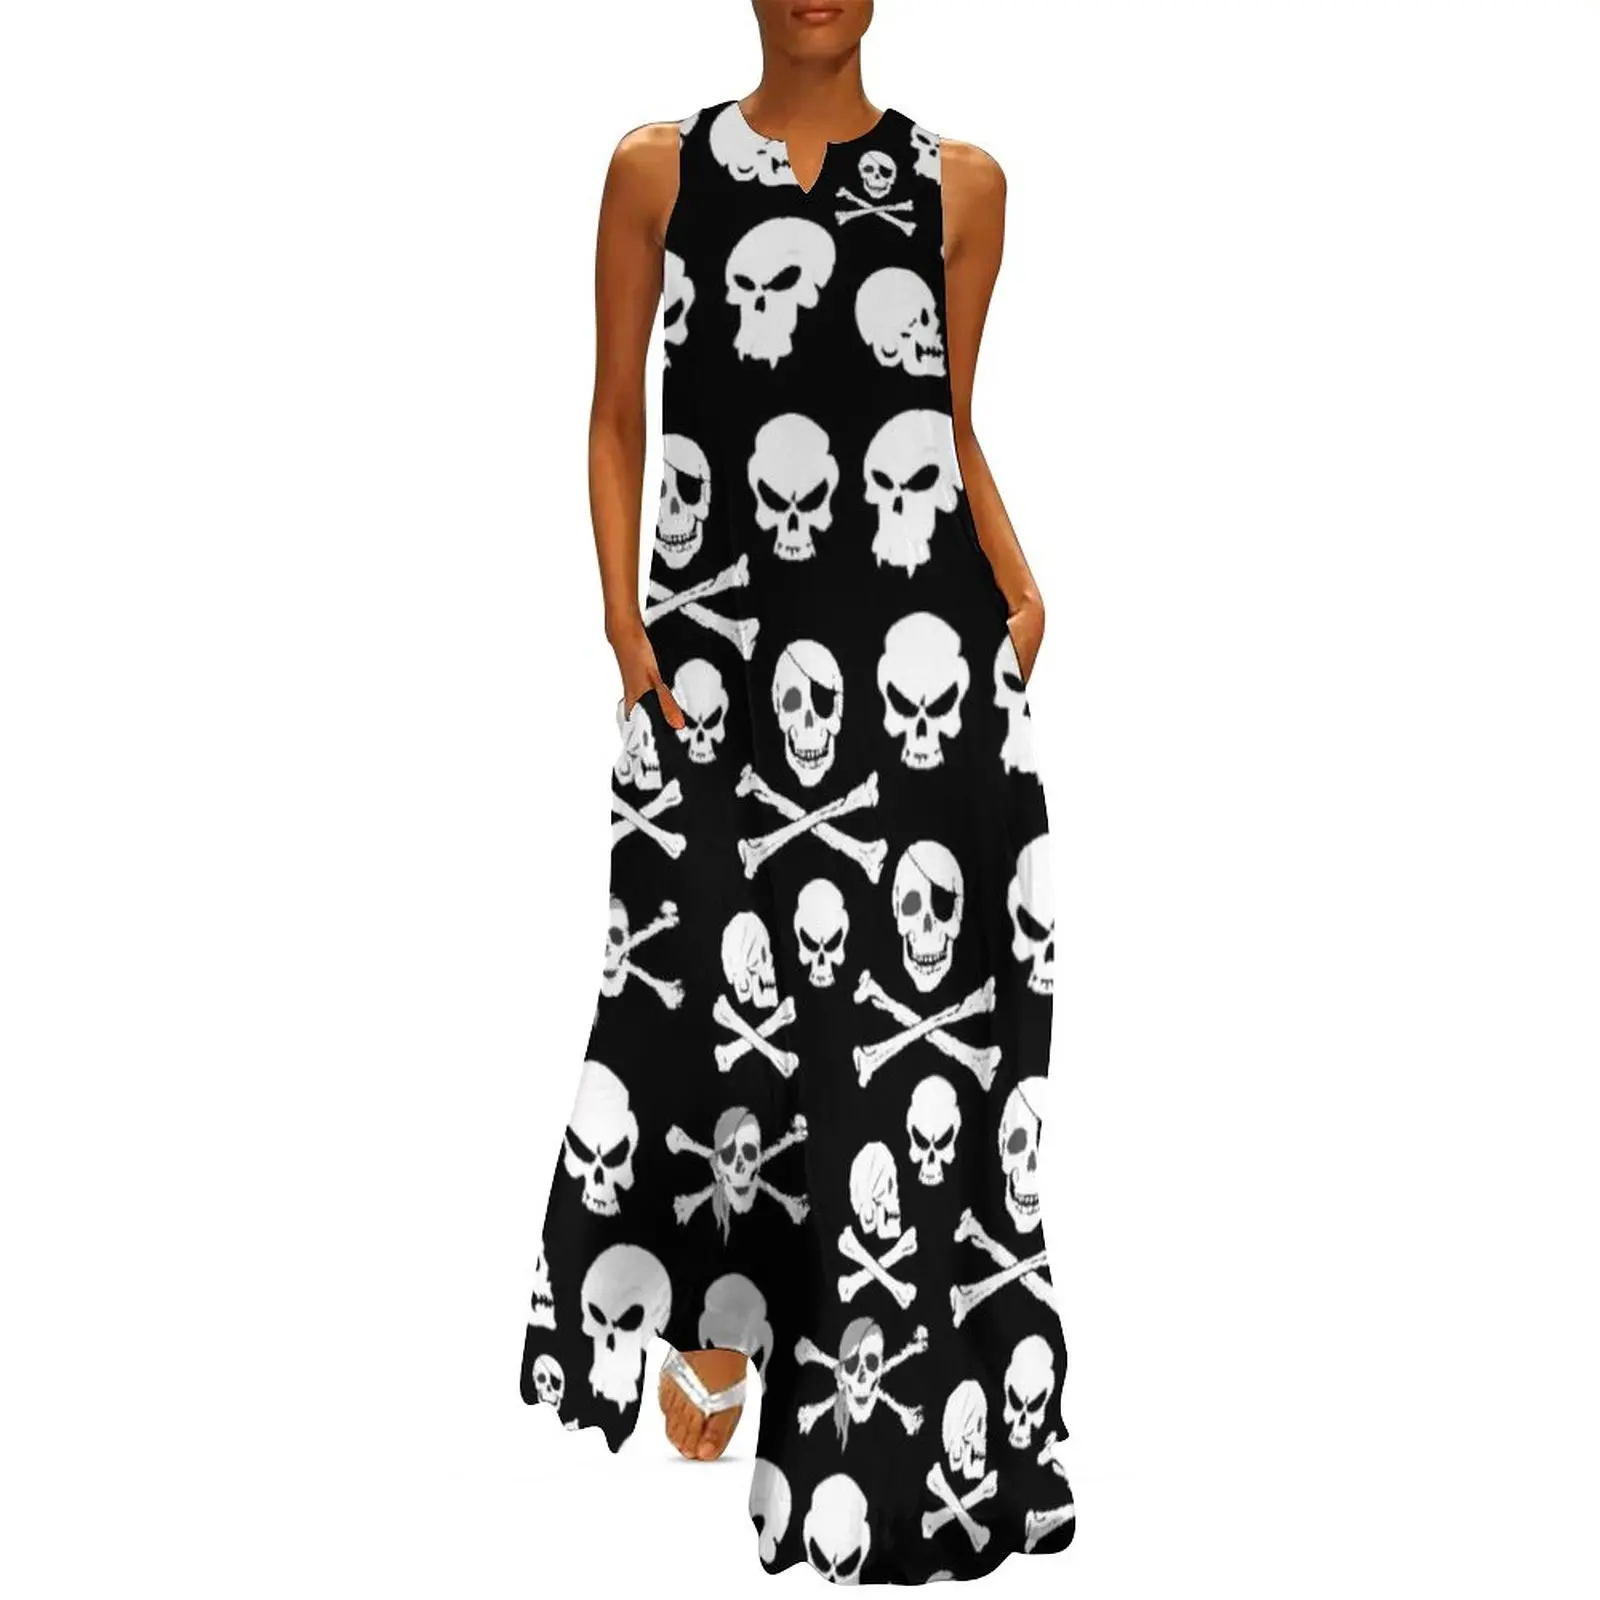 

White Skull Dress Summer Pirate Cross Bones Skulls Street Fashion Casual Long Dresses Women Print Party Maxi Dress Big Size 5XL